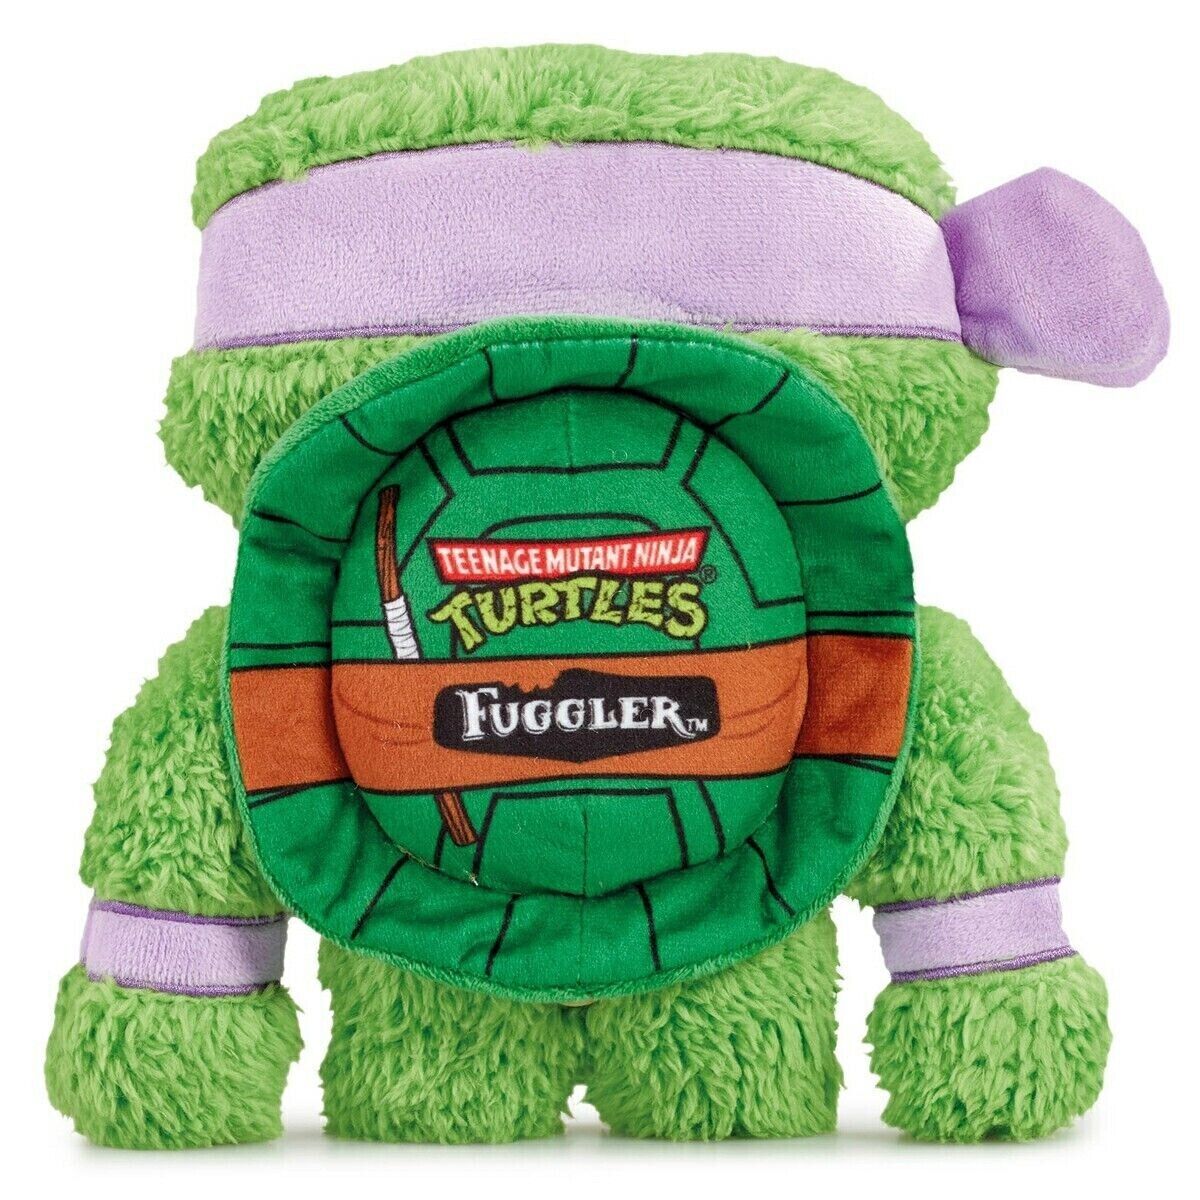 Teenage Mutant Ninja Turtles x Fuggler - Donatello